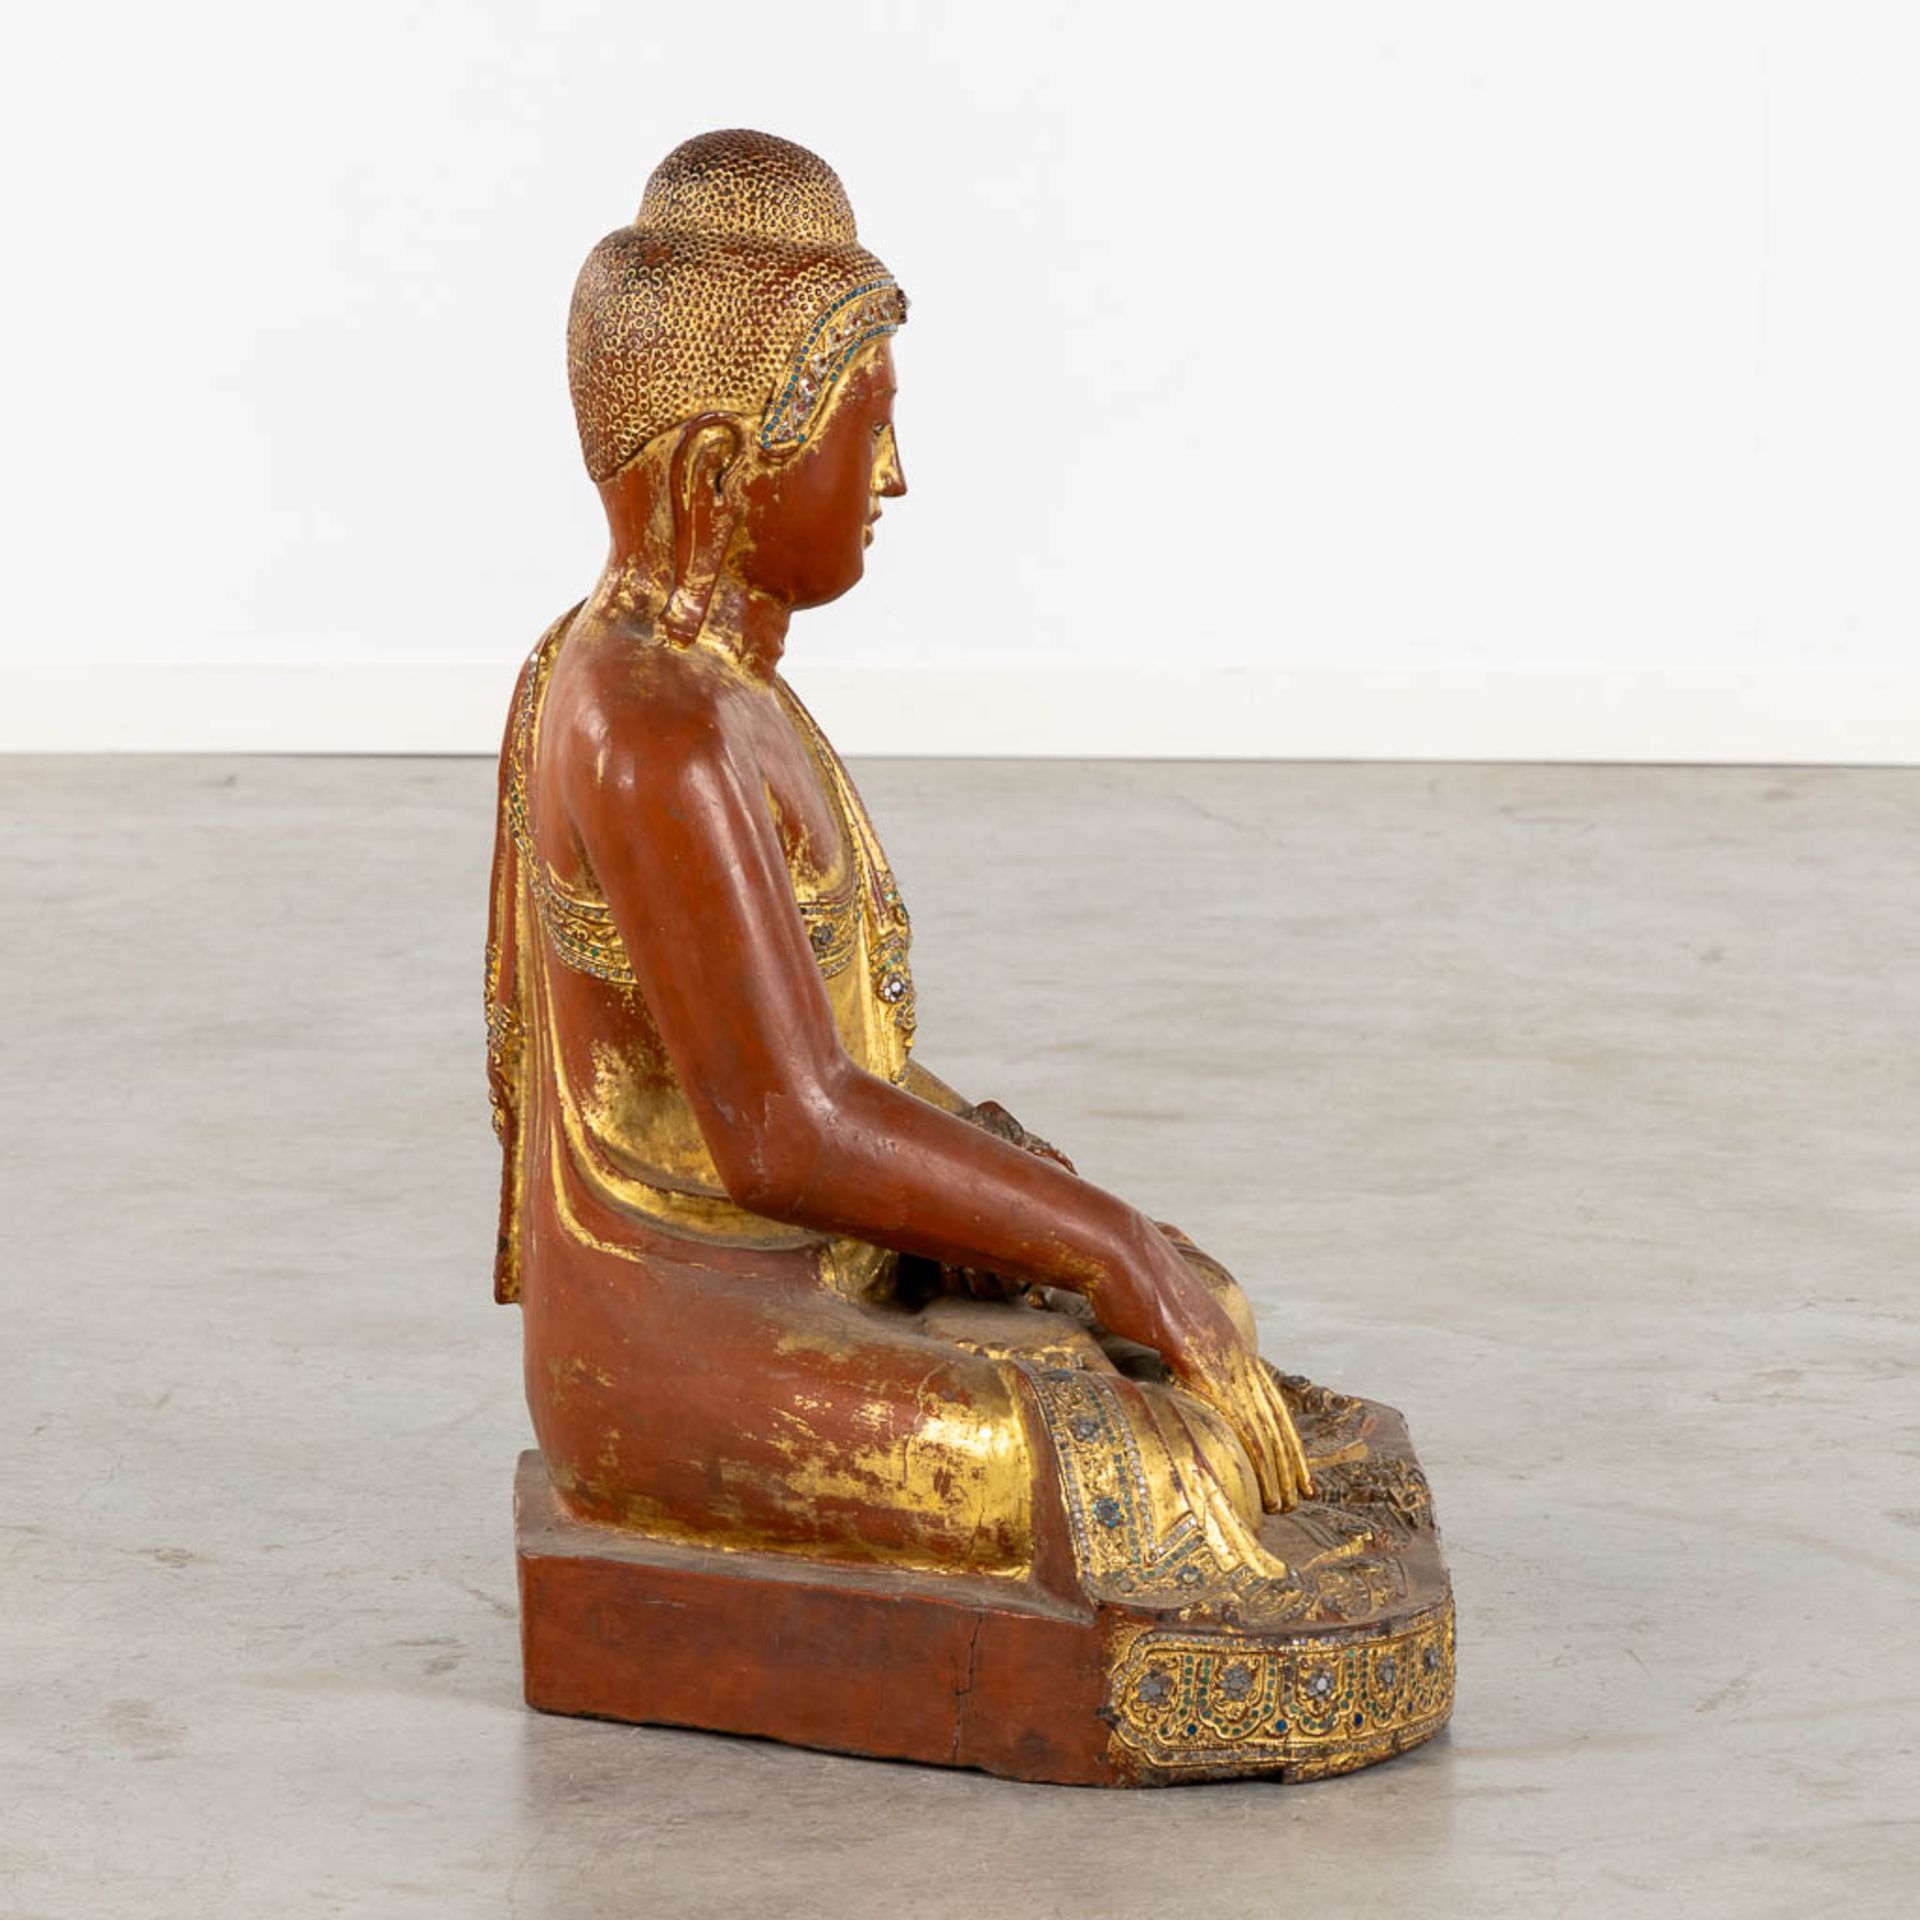 A large wood-sculptured Mandalay Buddha figure, Probably Birma, 19th C. (W:45 x H:72 cm) - Image 4 of 14